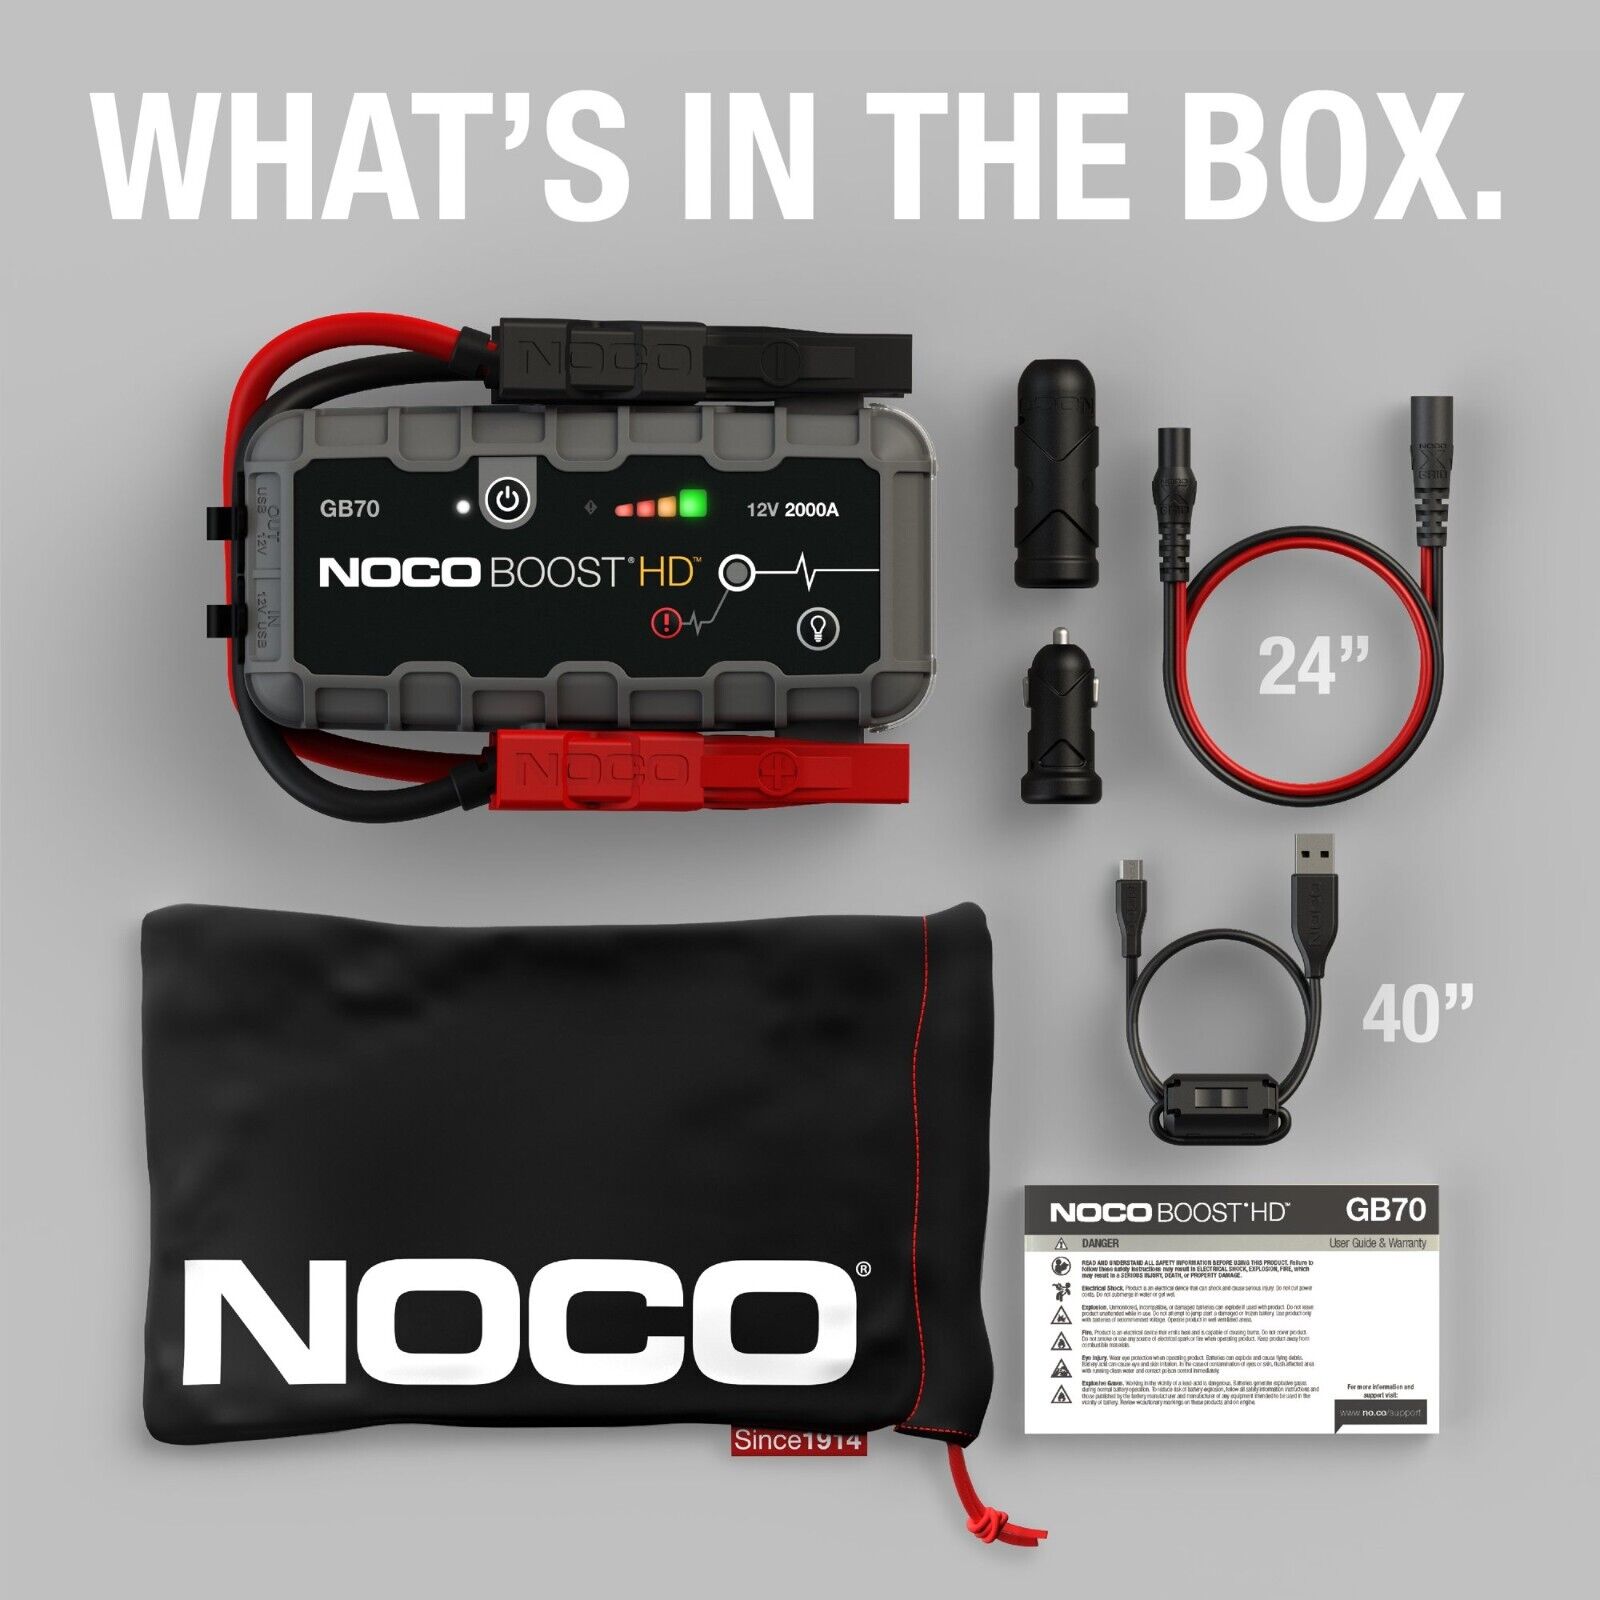 GB70 NOCO BOOST HD ブースターパック ガソリン車ディーゼル車ジャンプスターター スマホバッテリー 送料無料